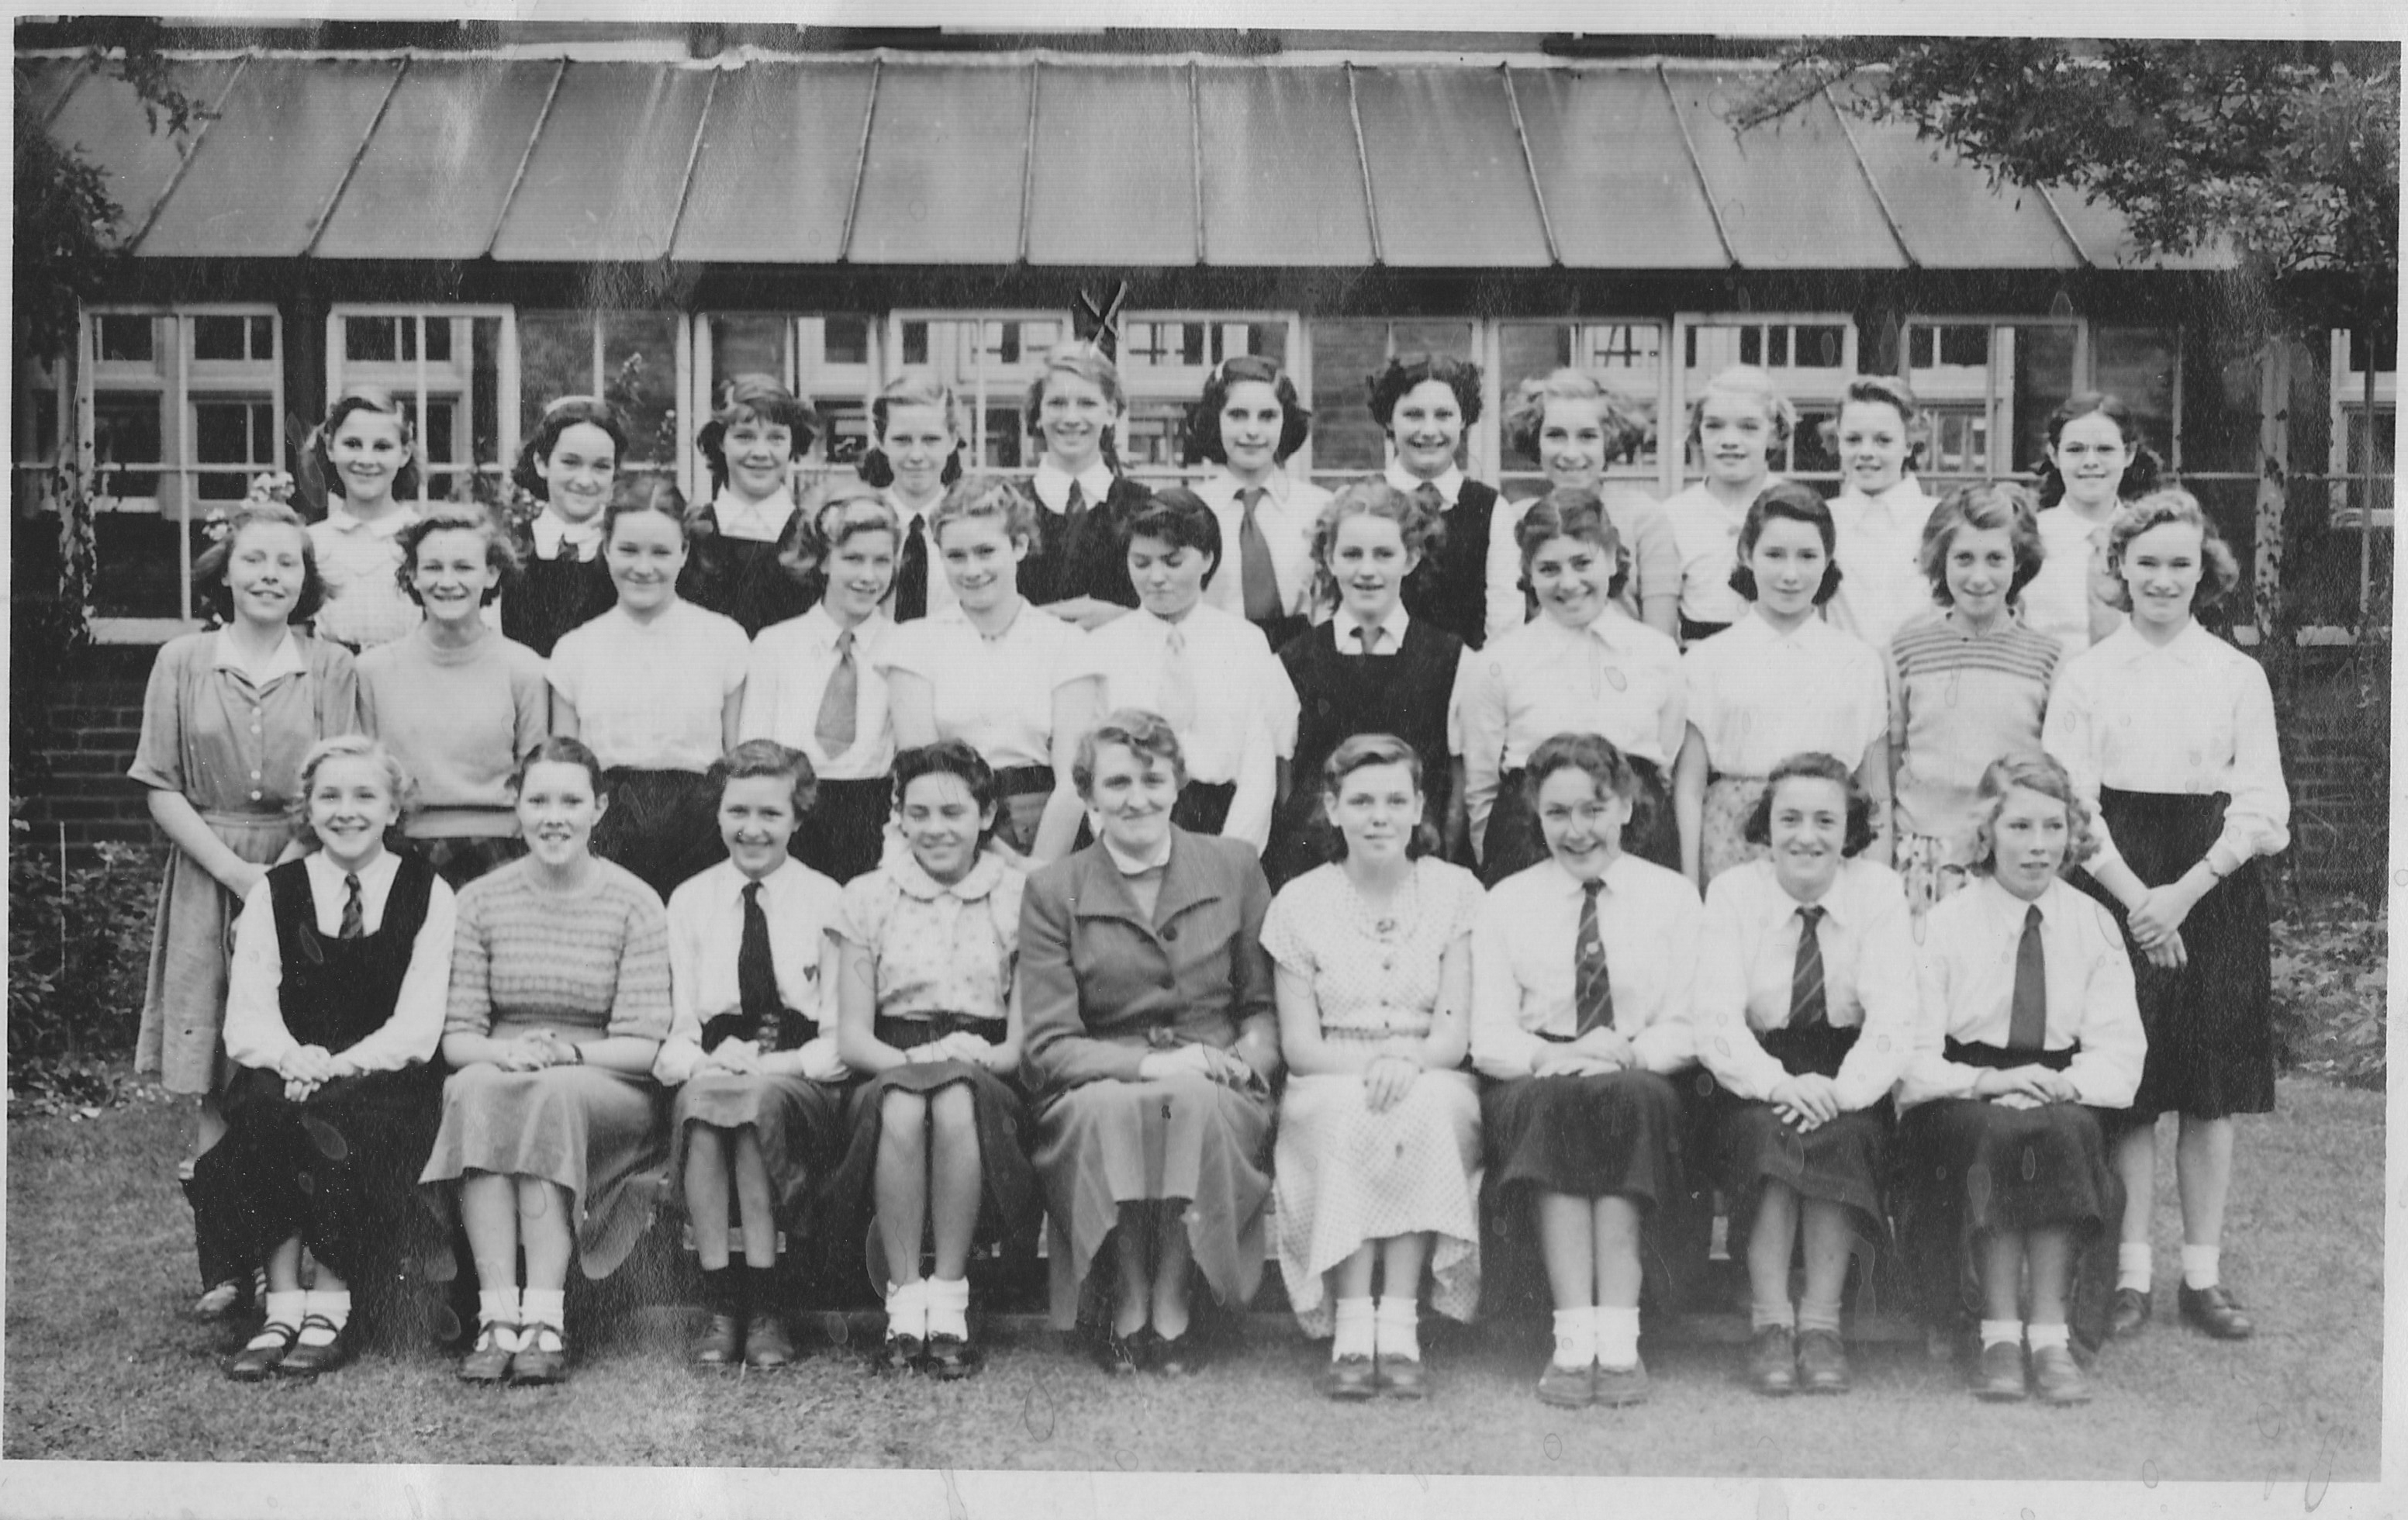 Rainham Secondary School for girls